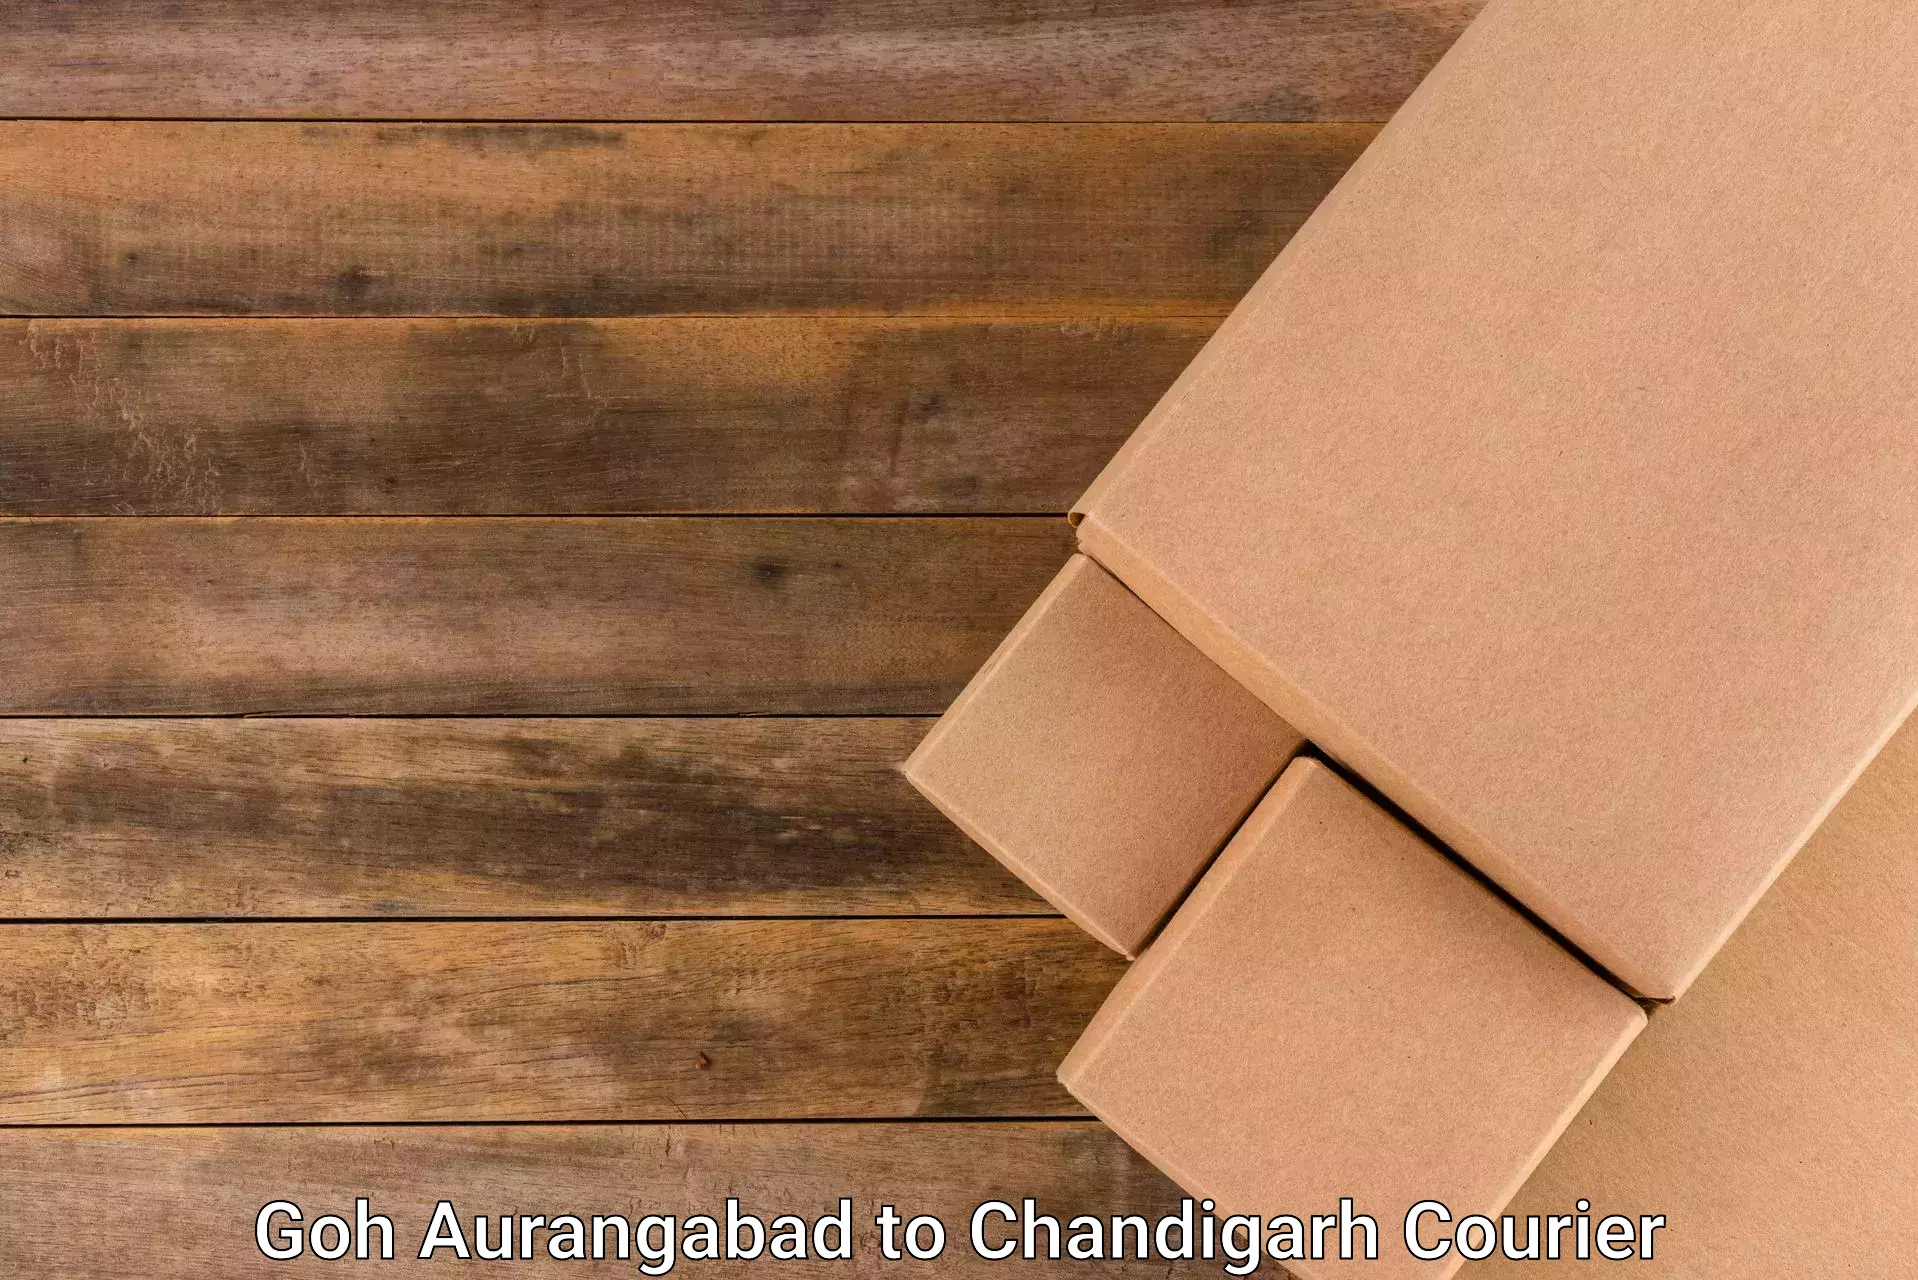 Courier service efficiency Goh Aurangabad to Chandigarh